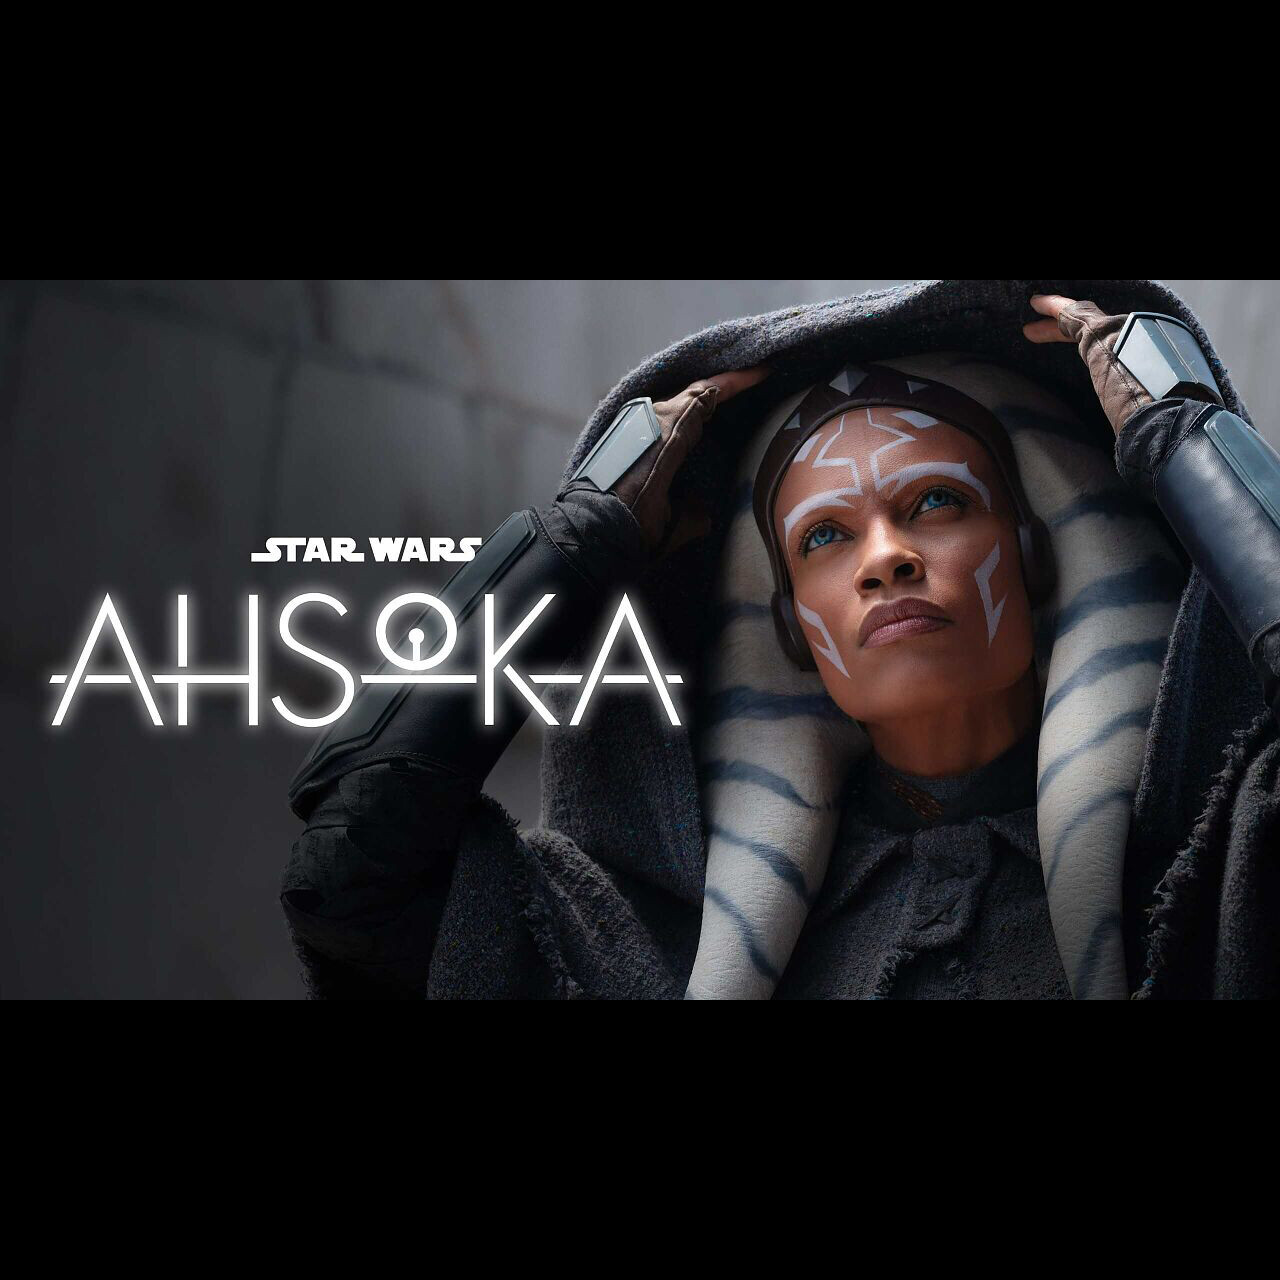 Unreal Engine VFX for Star Wars - Ahsoka